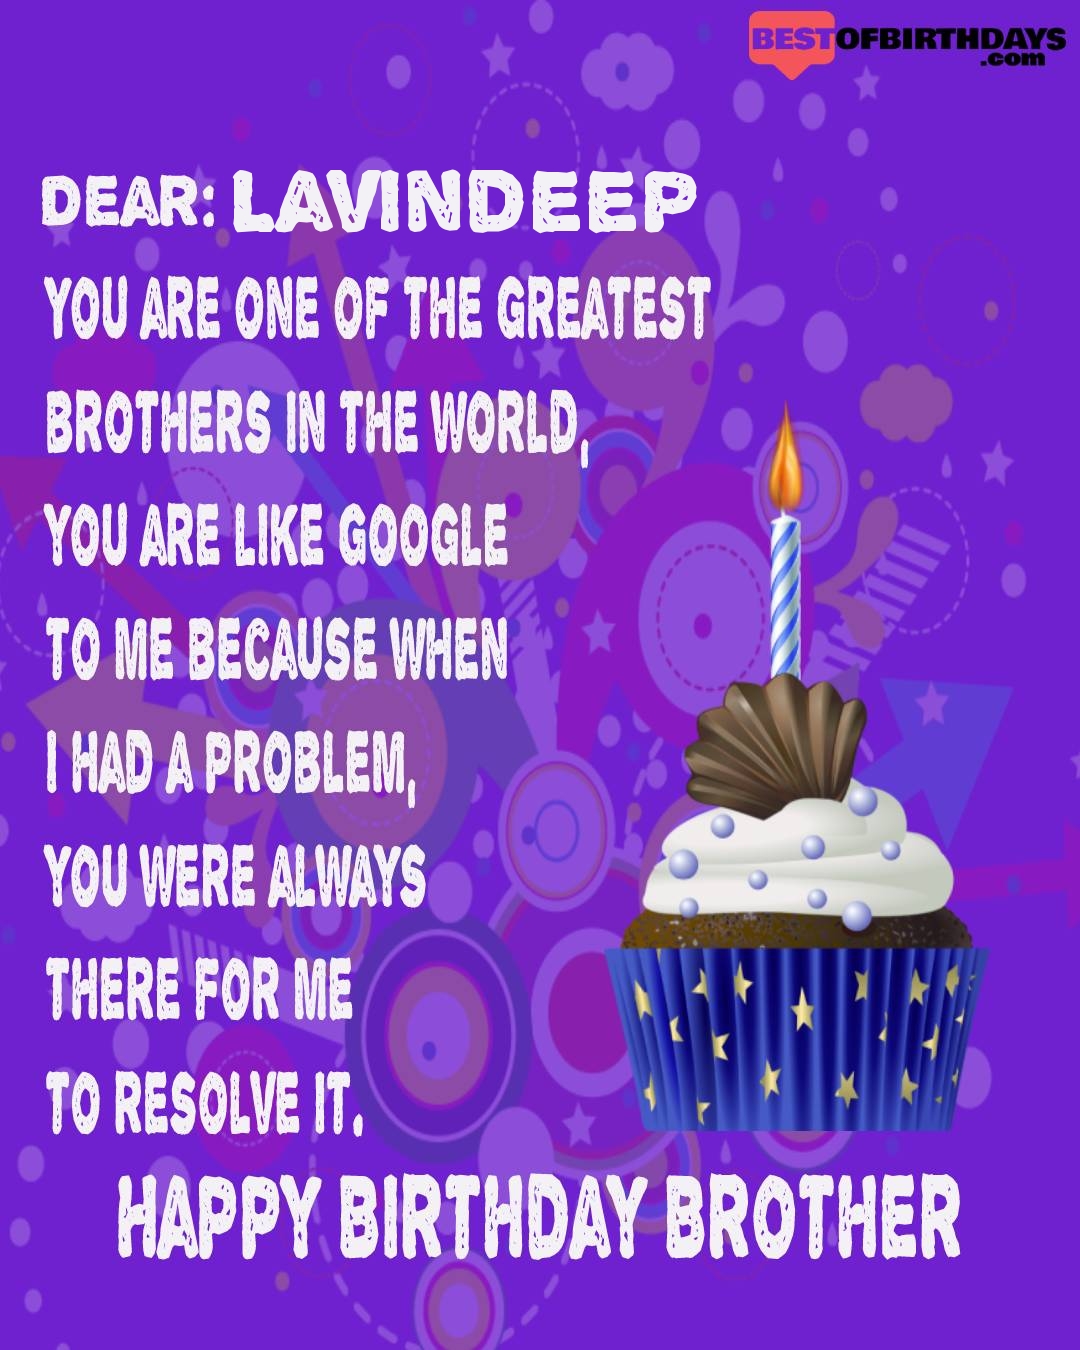 Happy birthday lavindeep bhai brother bro